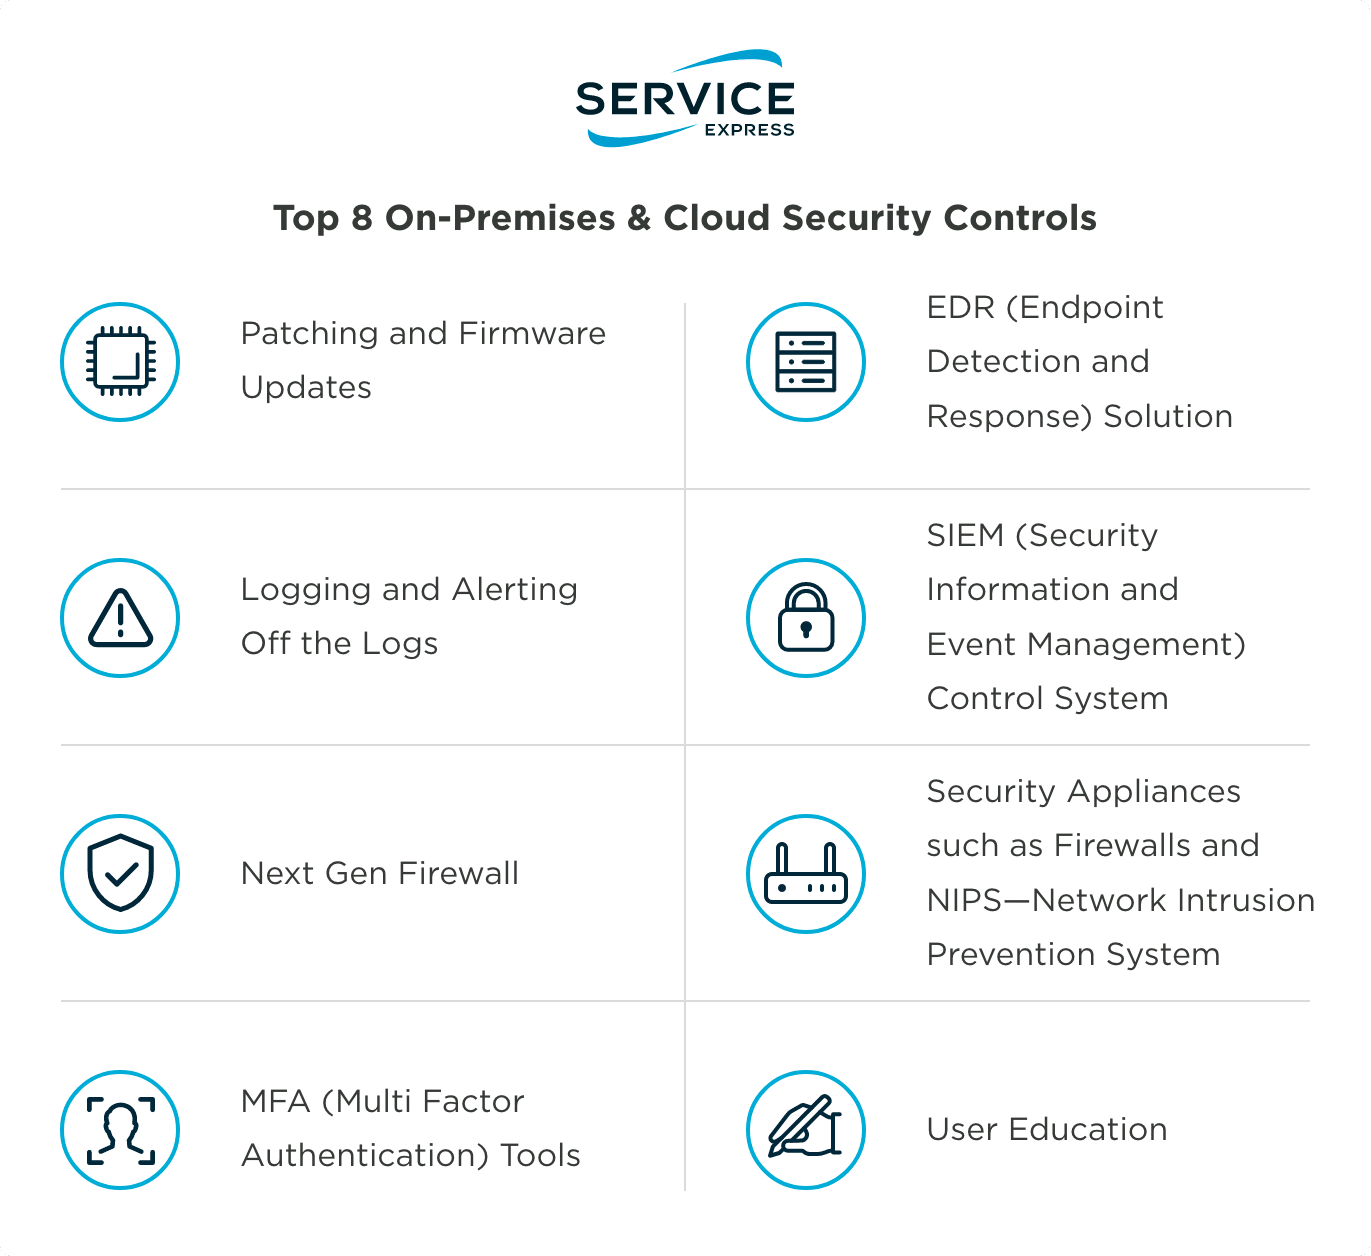 Top 8 On-Premises & Cloud Security Controls | Service Express